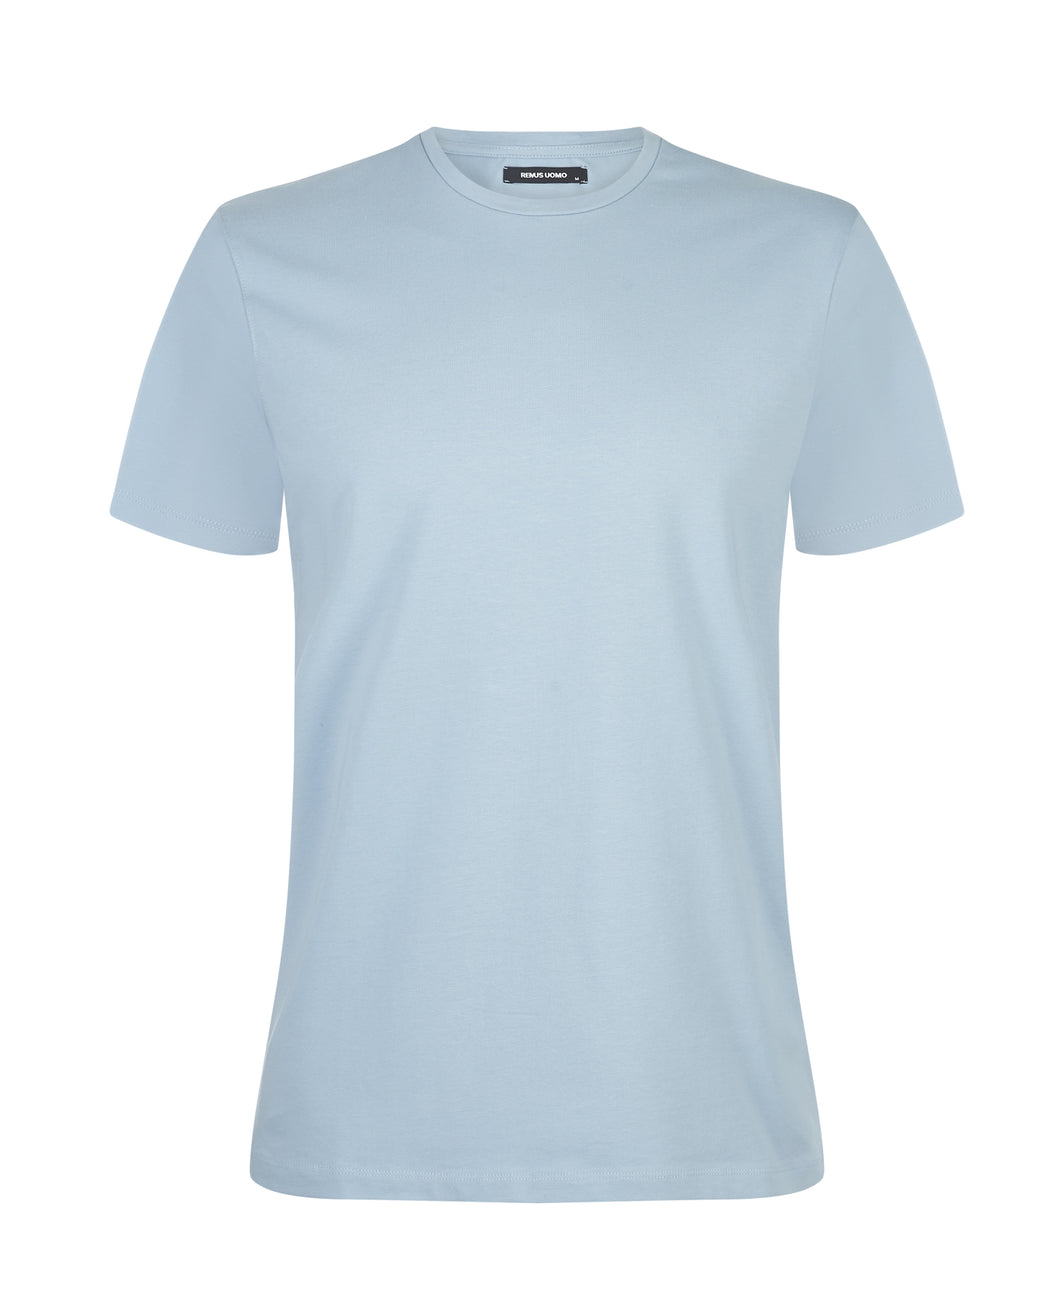 REMUS UOMO Stretch Cotton T Shirt in Light Blue 133-53121